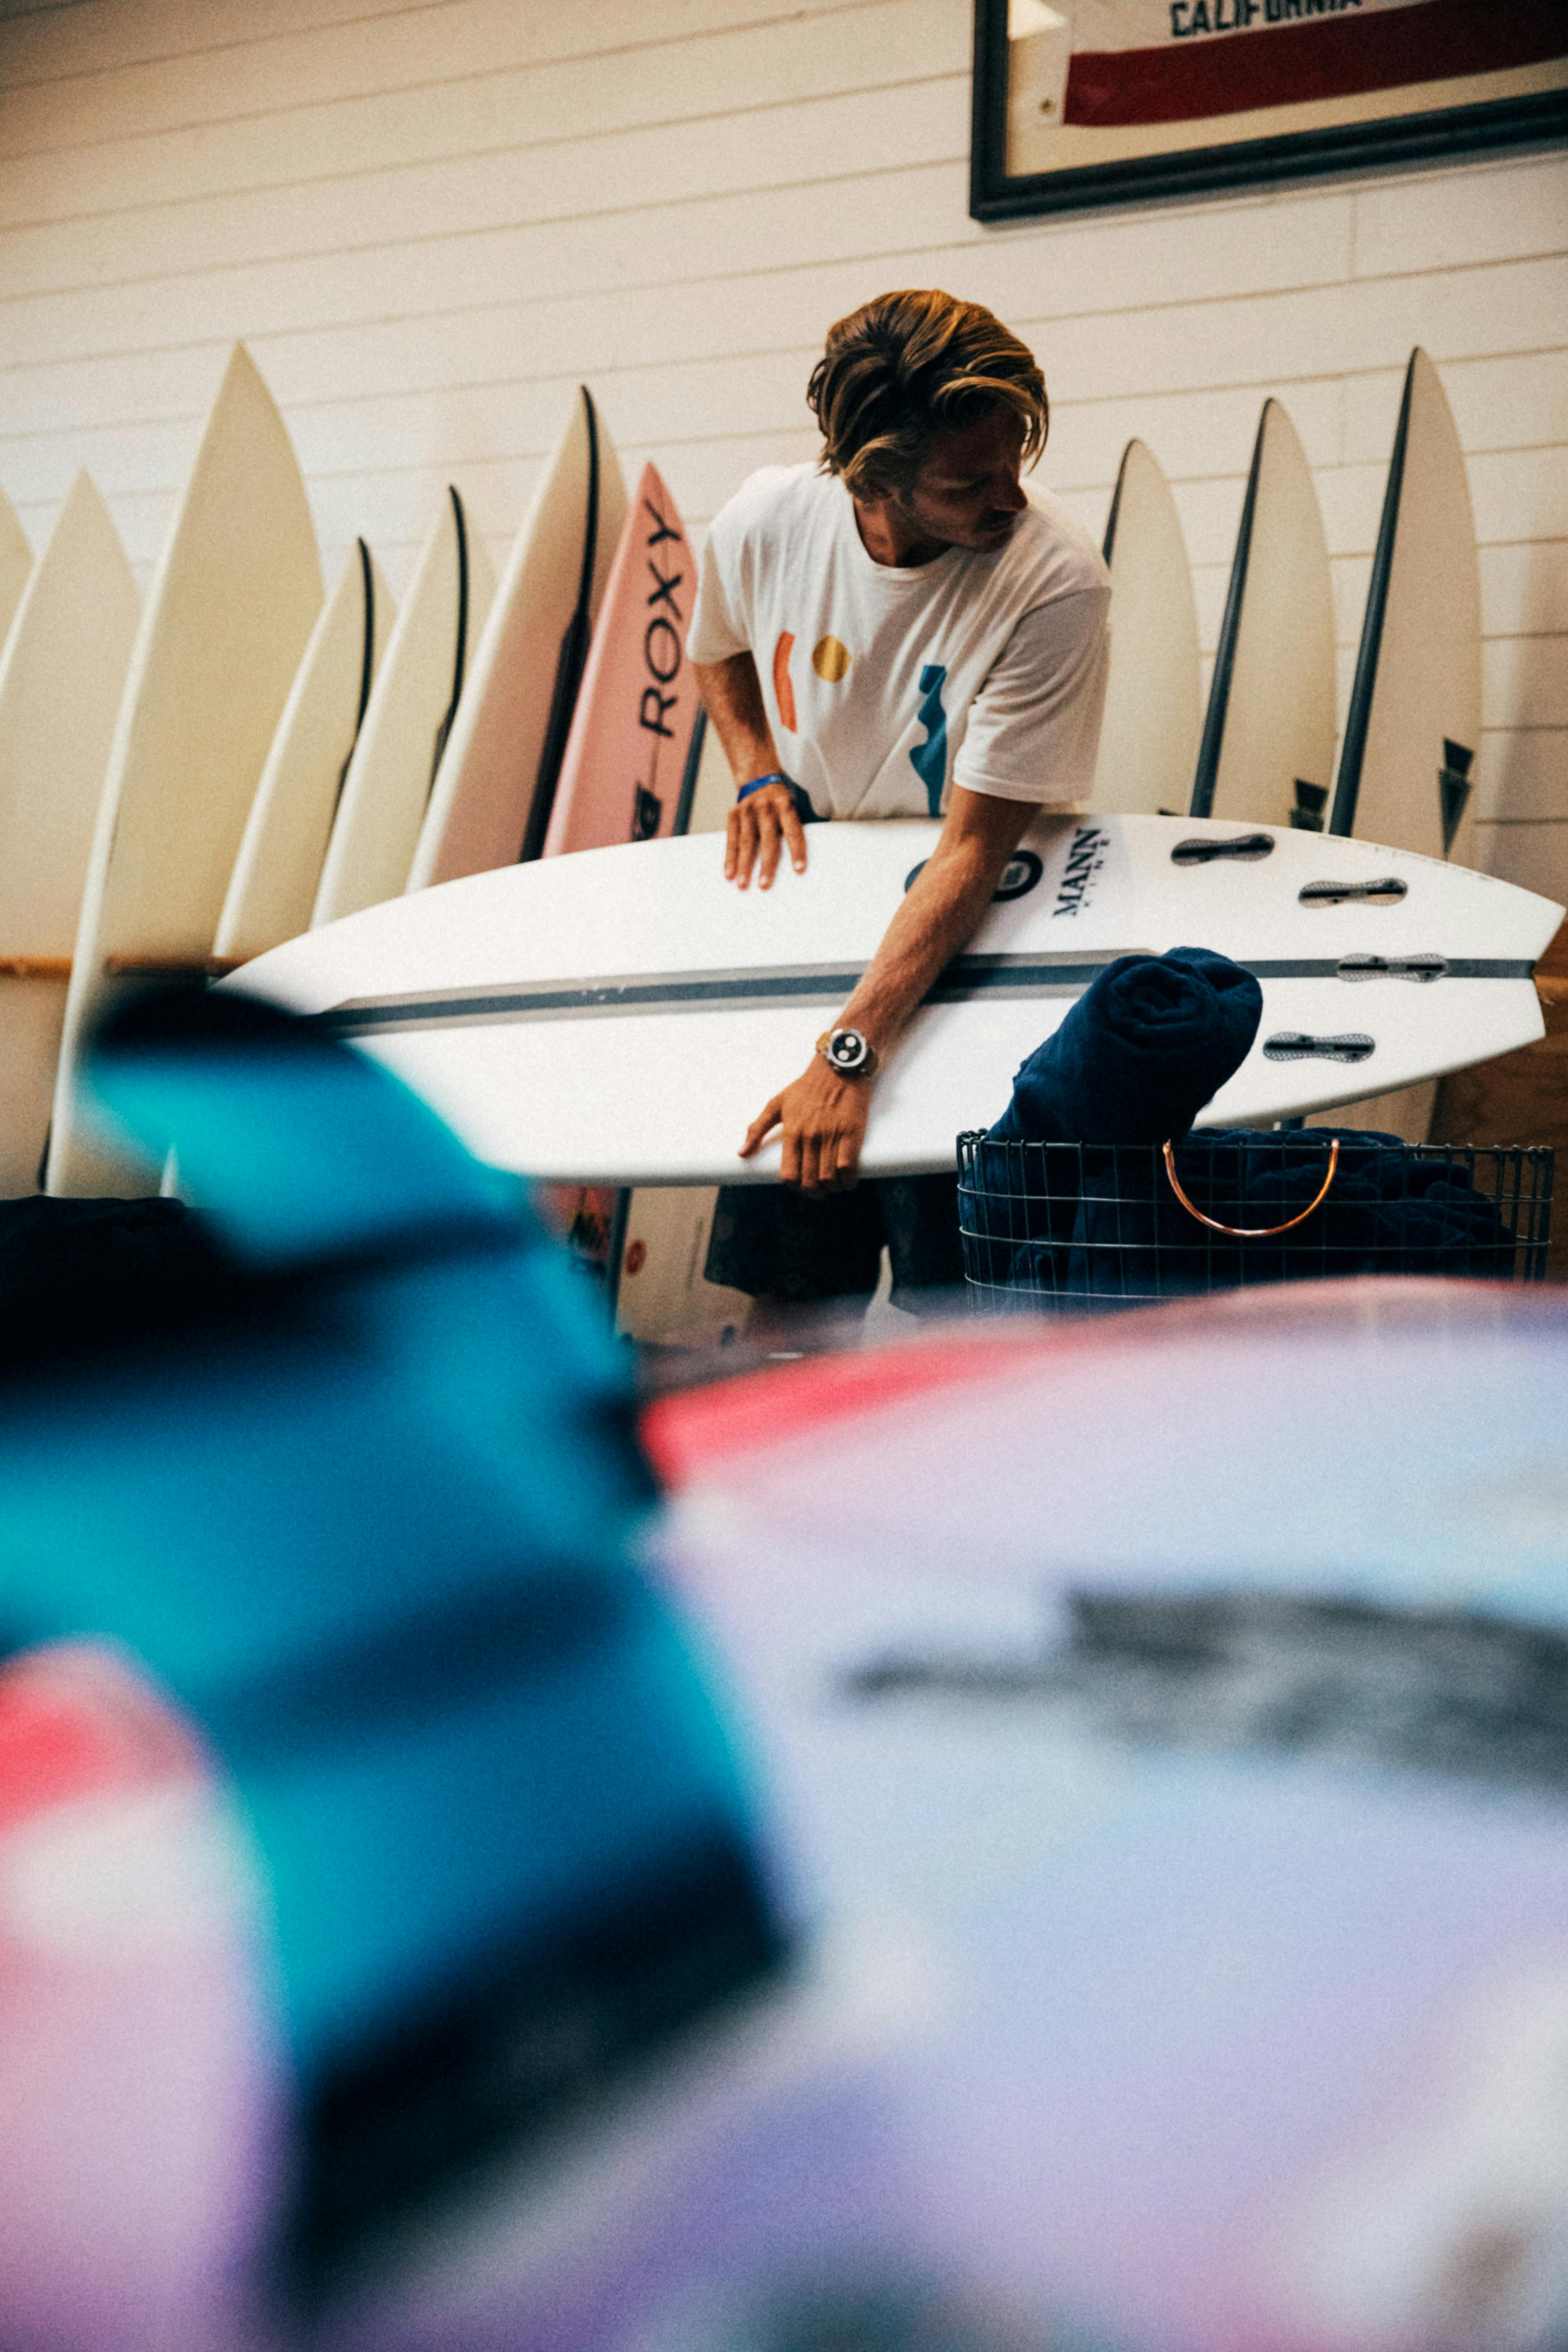 boards at Surf Ranch US